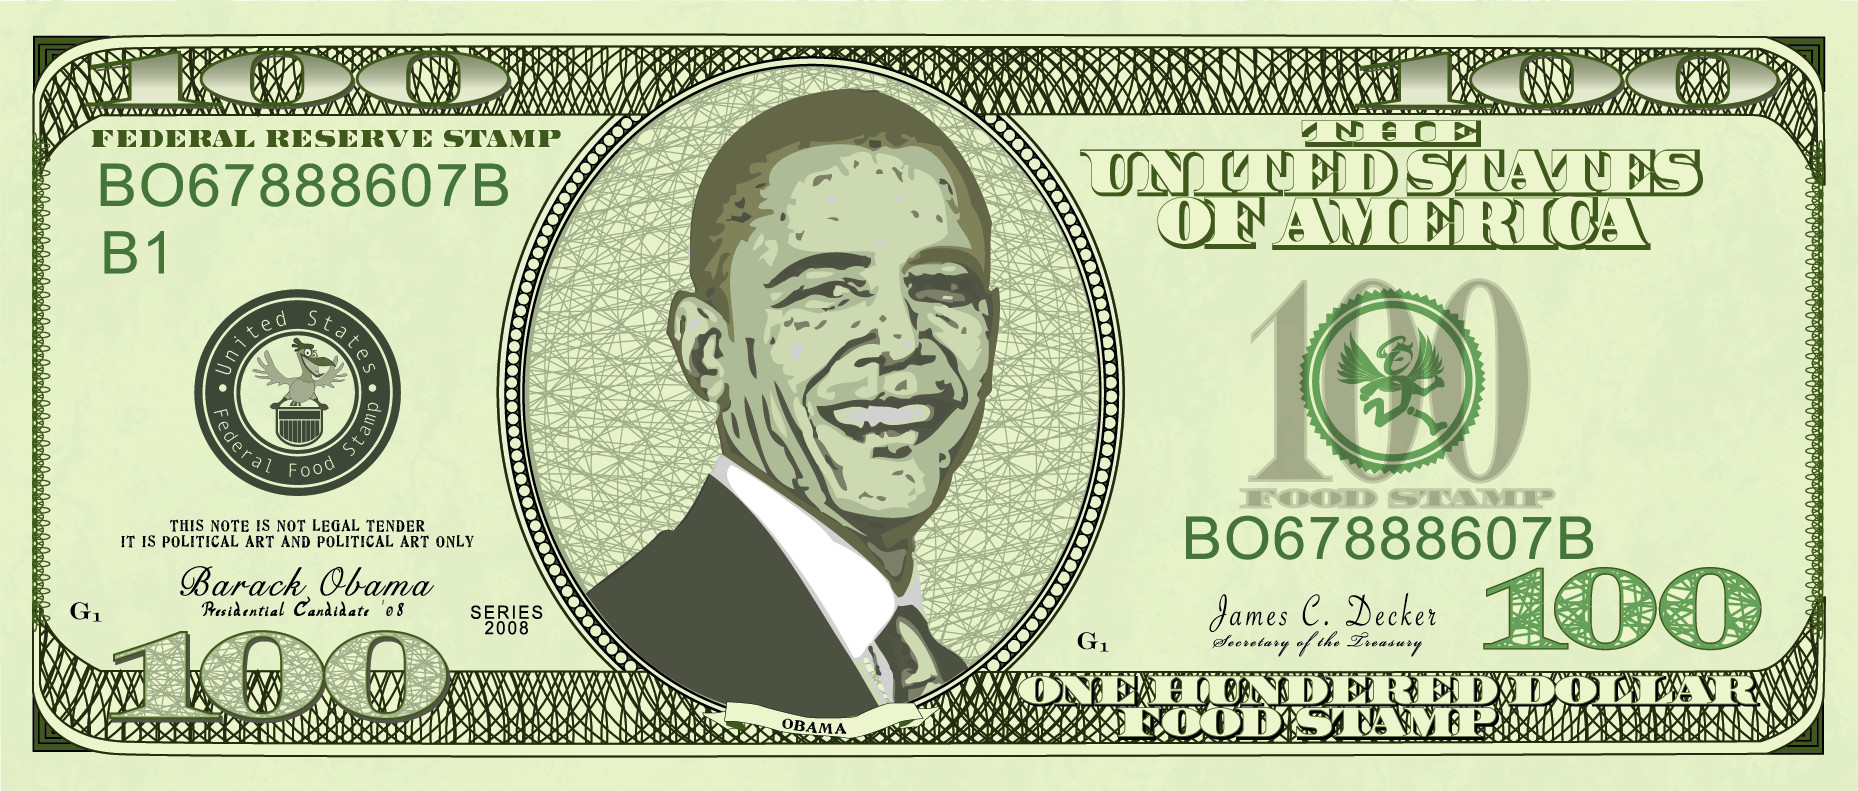 Obama_Bucks_by_eckert82.jpg